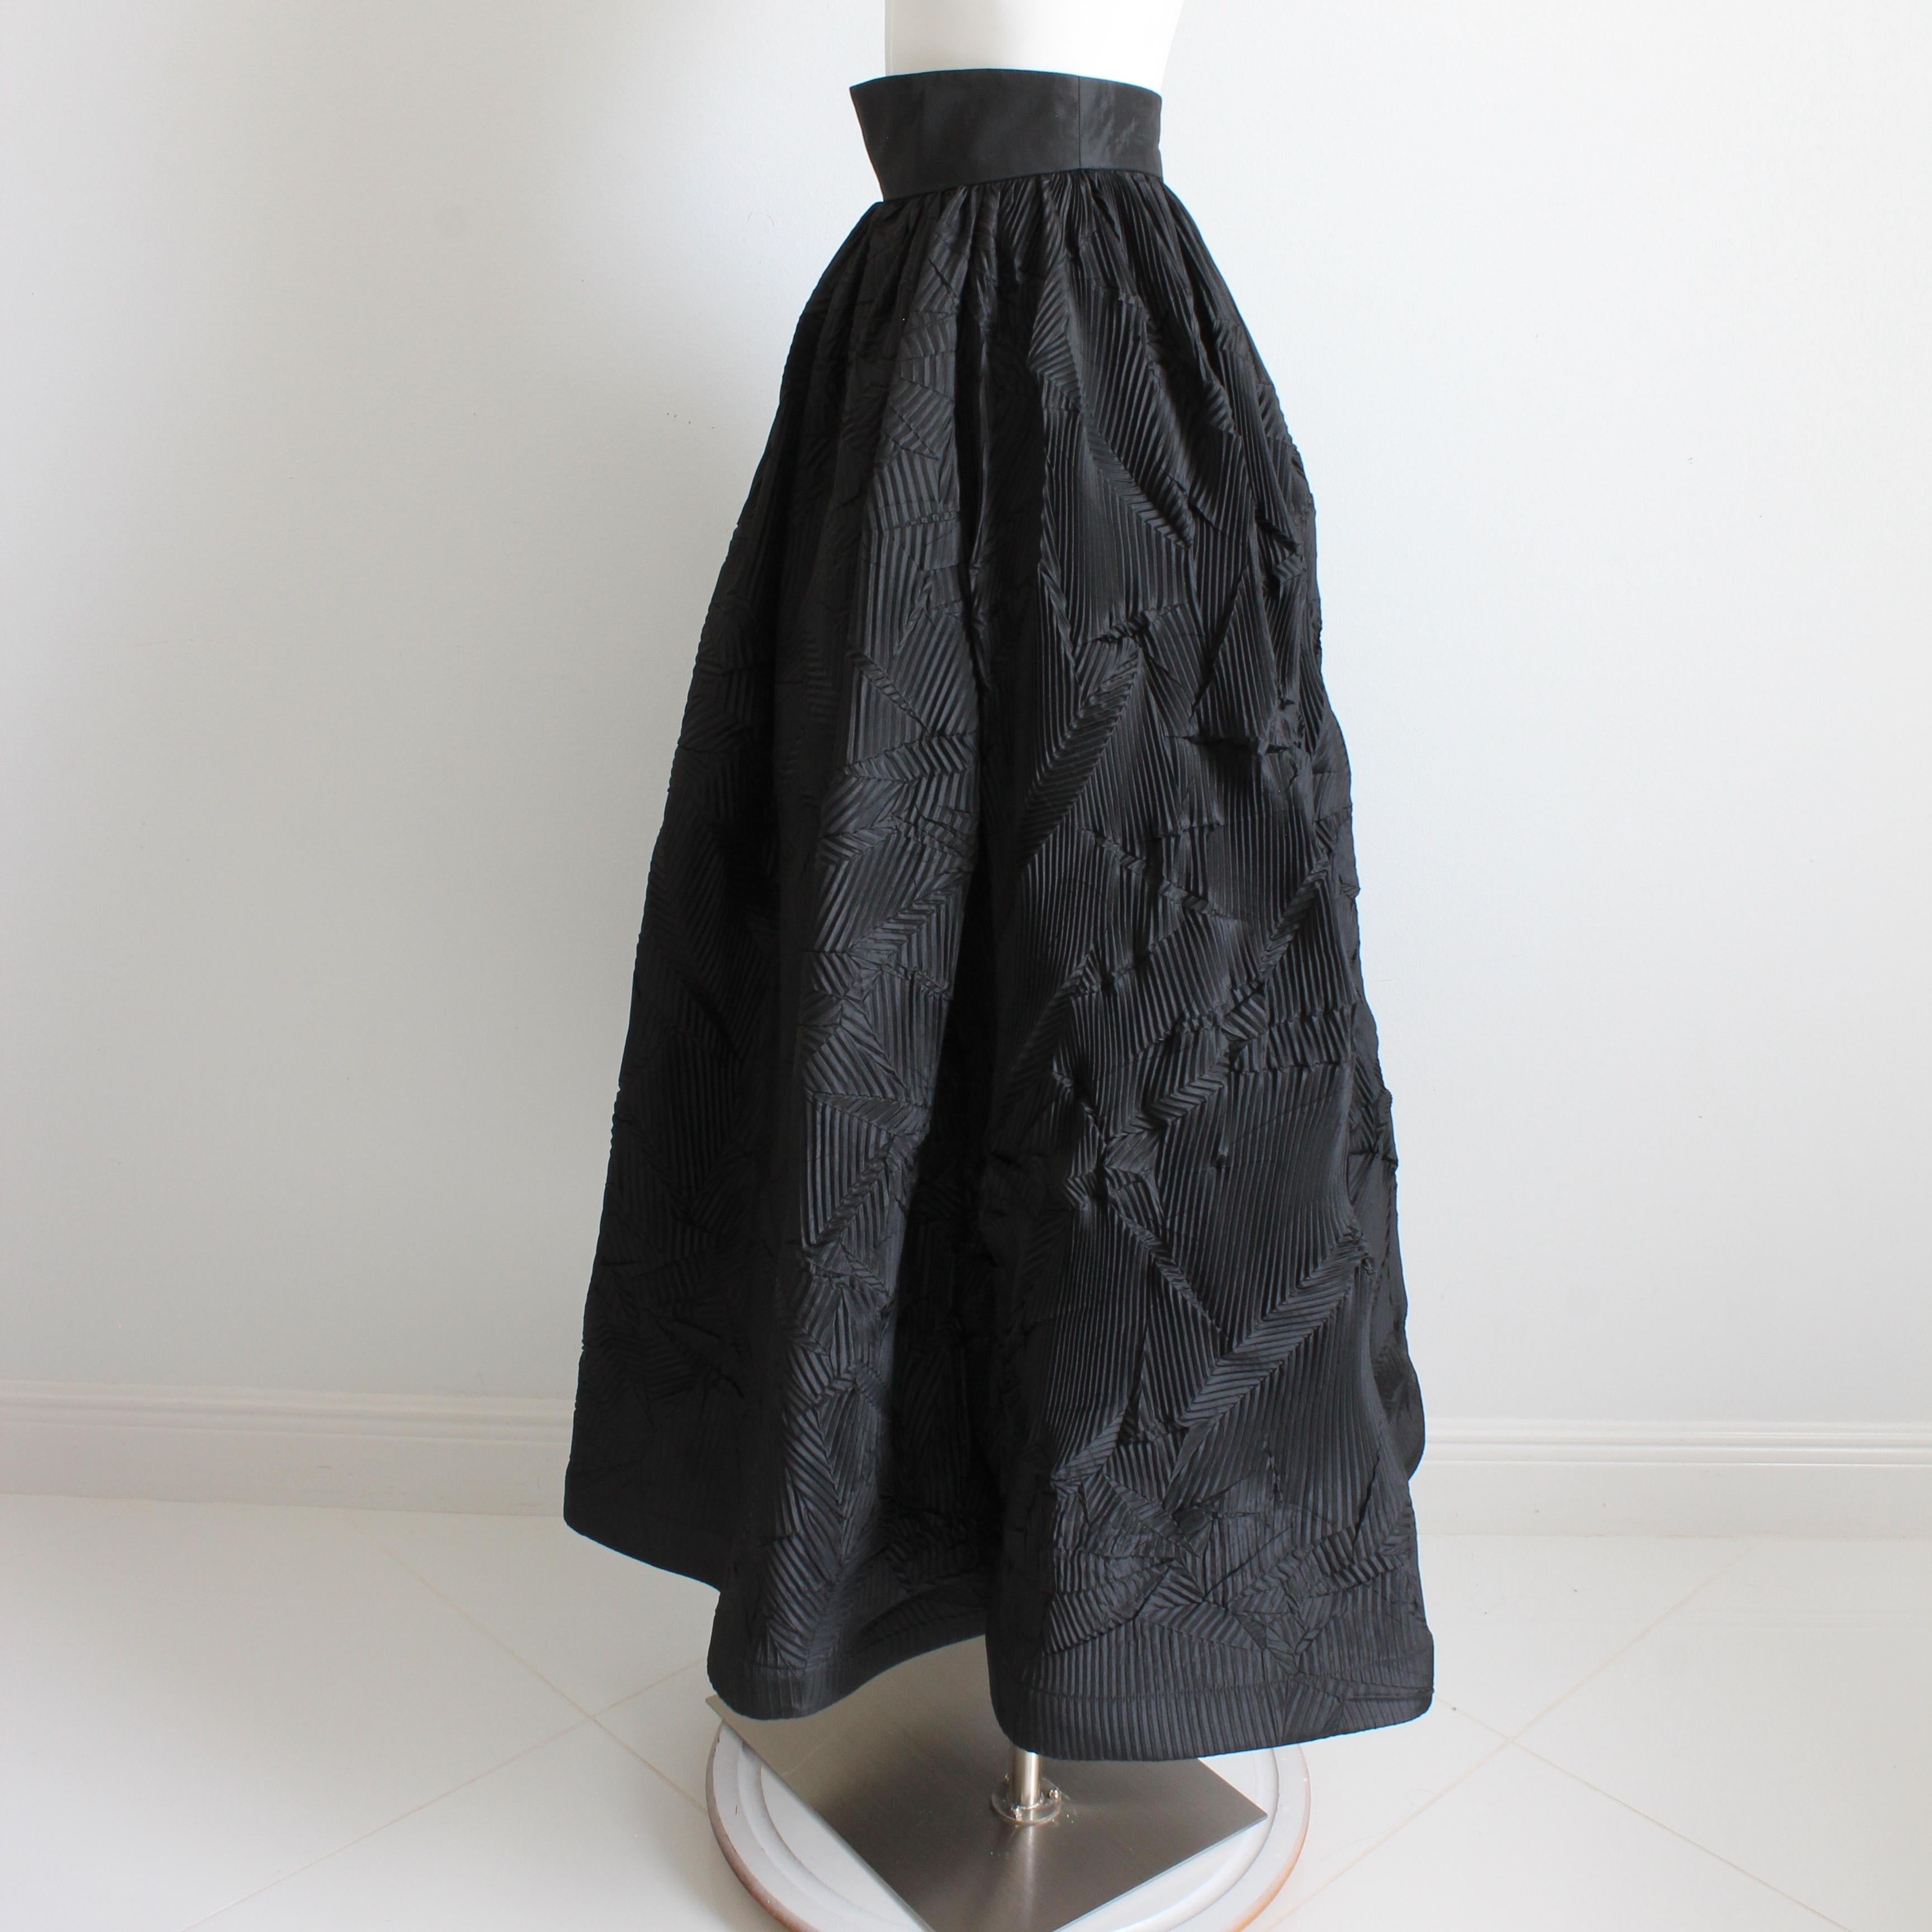 Sully Bonnelly Formal Skirt Black Full Length Abstract Pleated Avant Garde Sz 8 For Sale 3